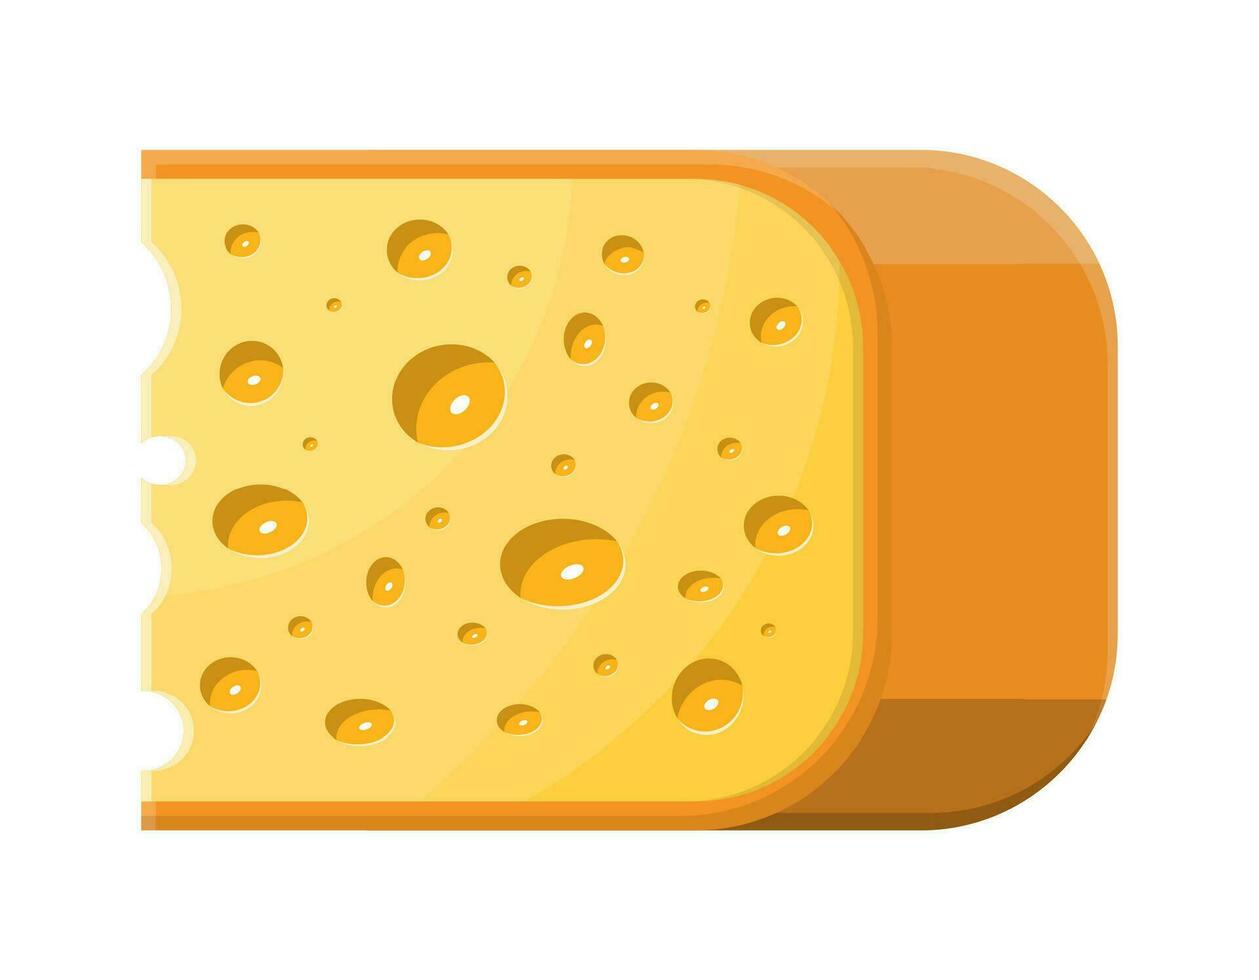 pedazo de queso aislado en blanco. Leche lechería producto. orgánico sano alimento. vector ilustración en plano estilo